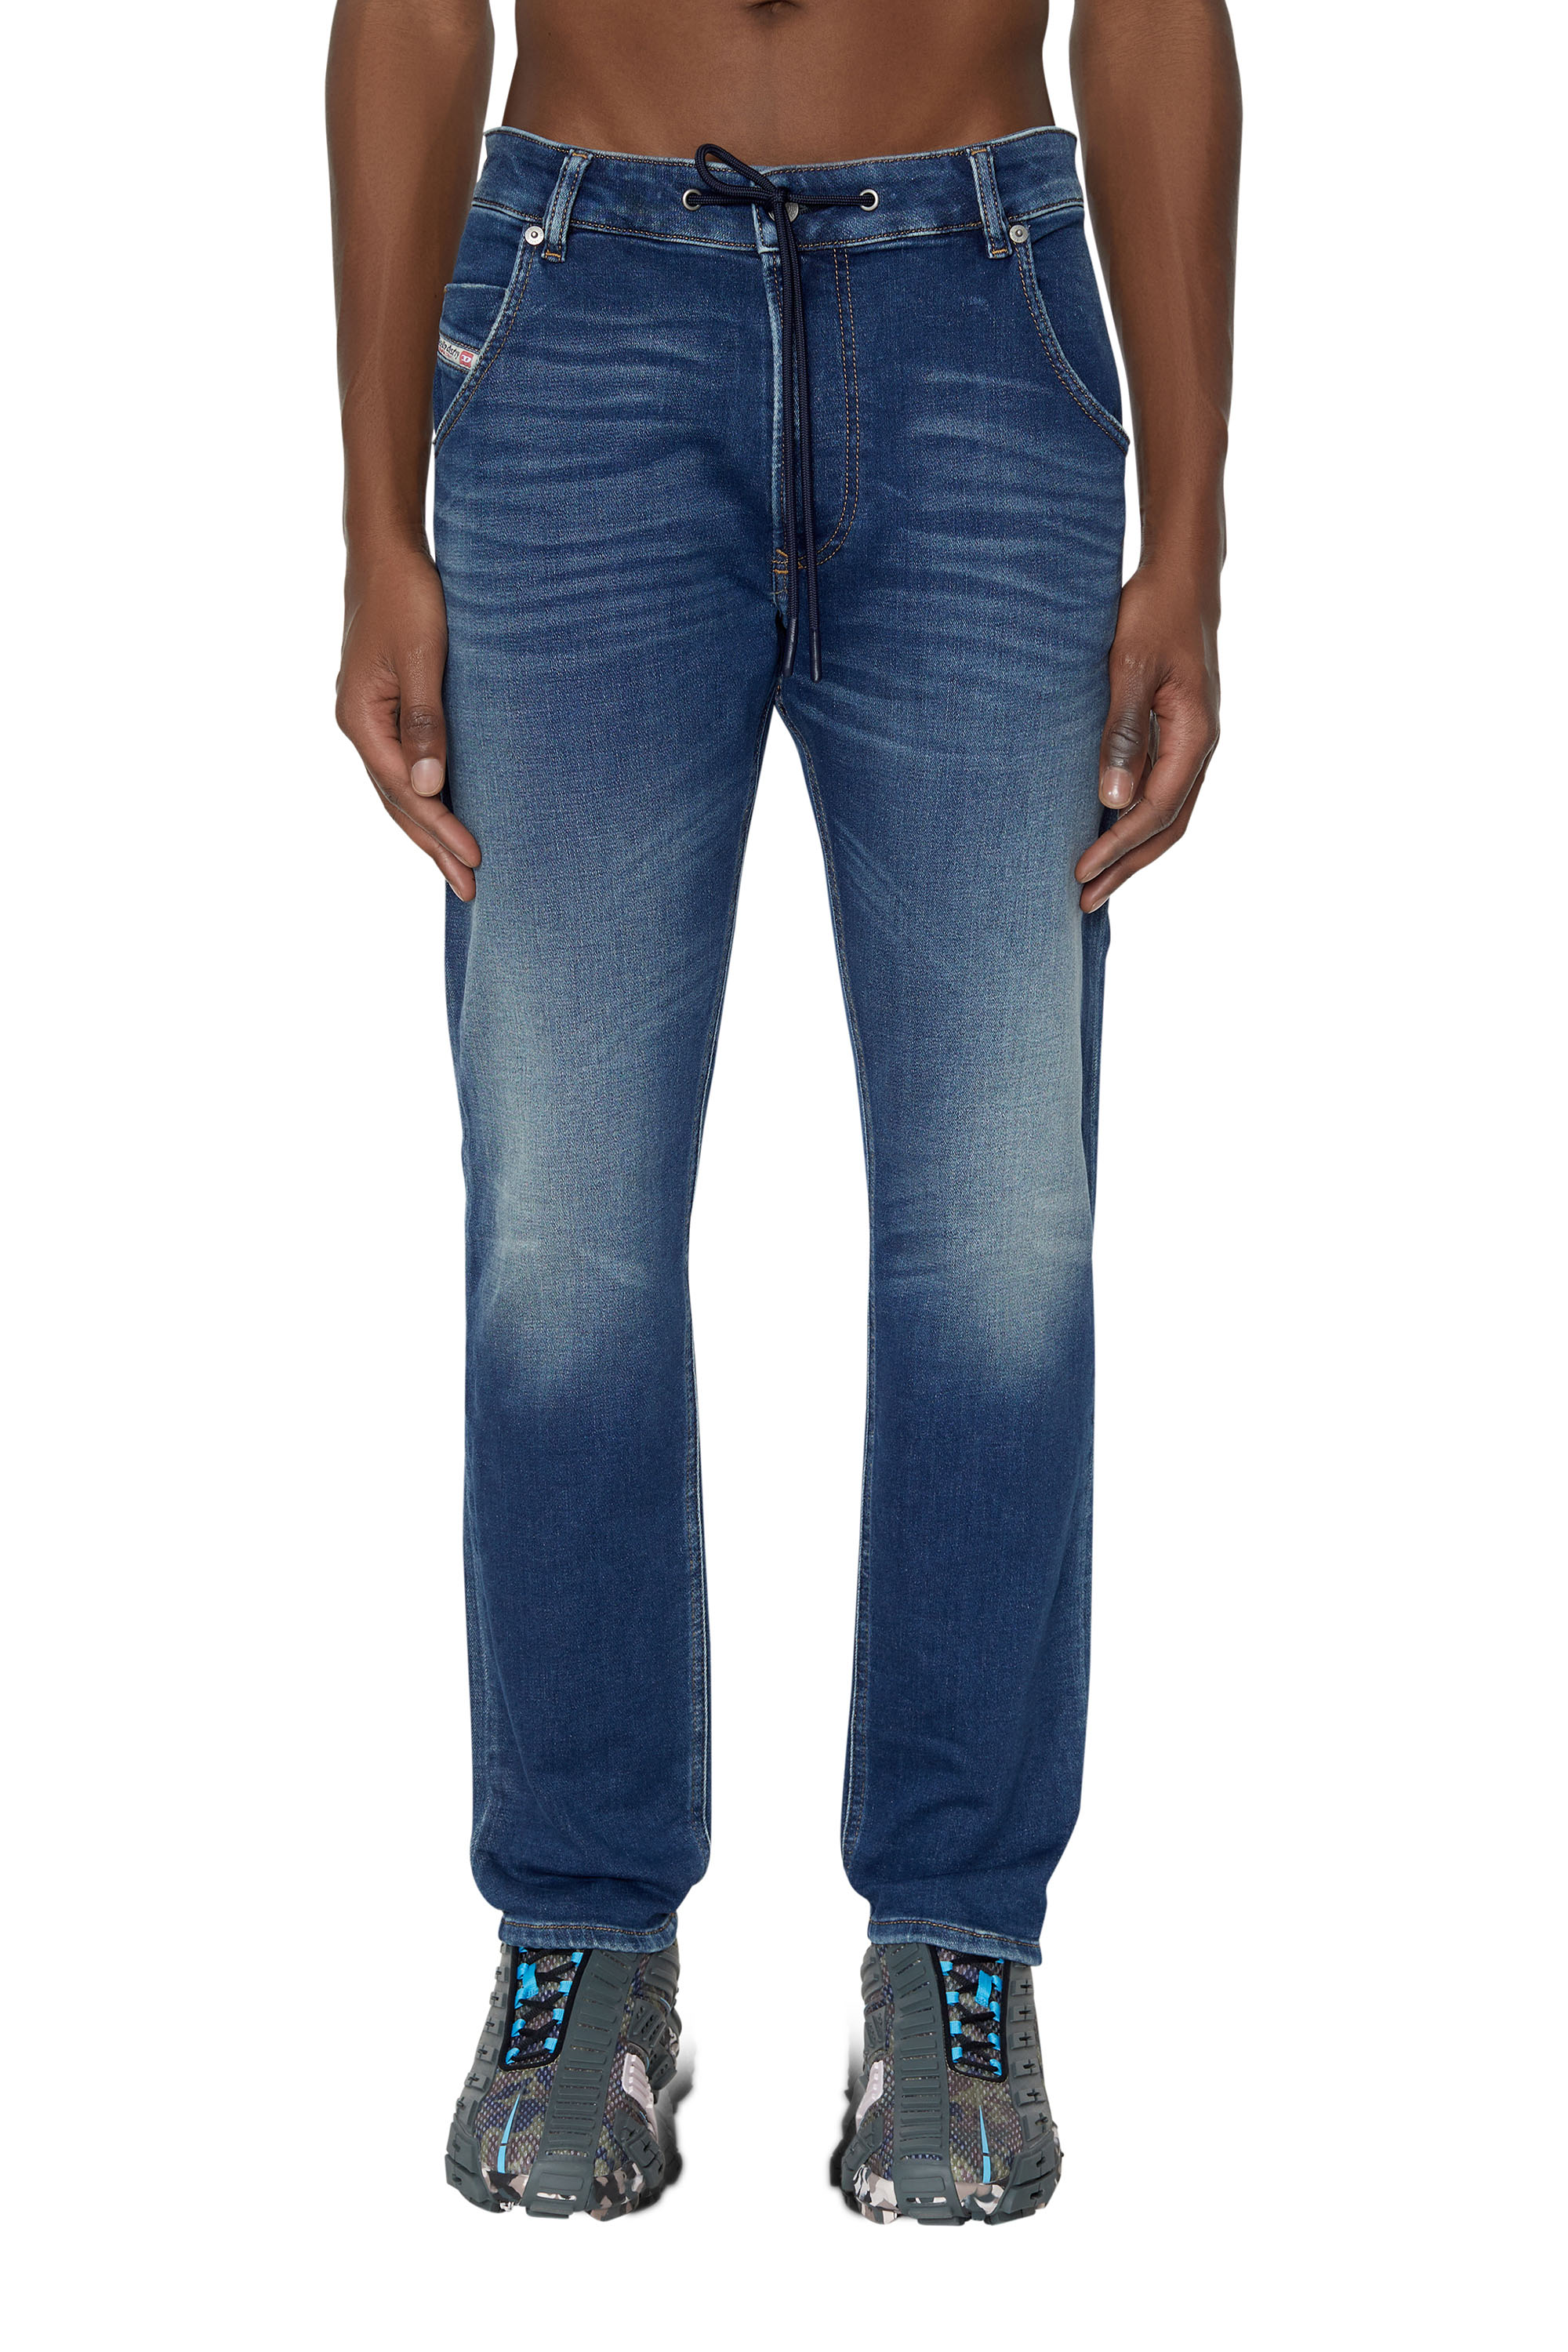 Diesel Jeans - KROOLEY-Y-T L.32 Sweat jeans blue